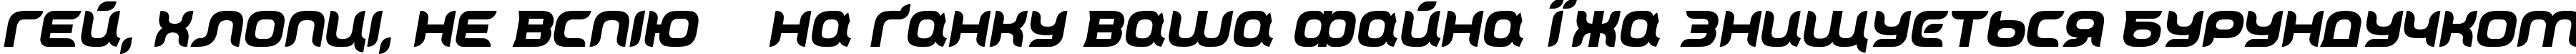 Пример написания шрифтом Cyrivendell by Ivan Apostolski текста на украинском